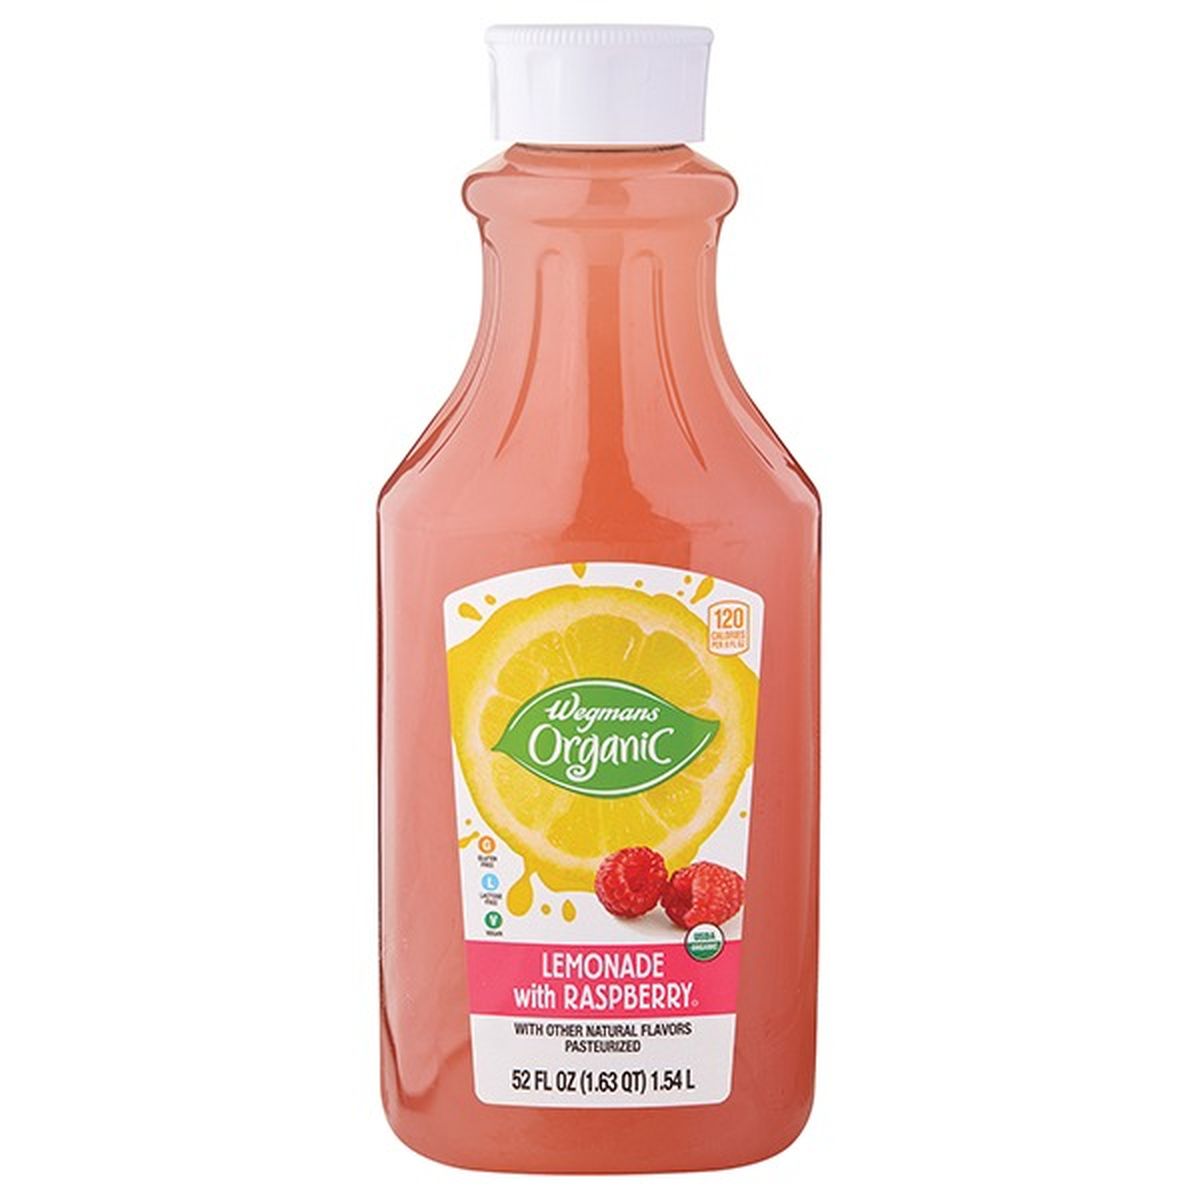 Calories in Wegmans Organic Lemonade with Raspberry